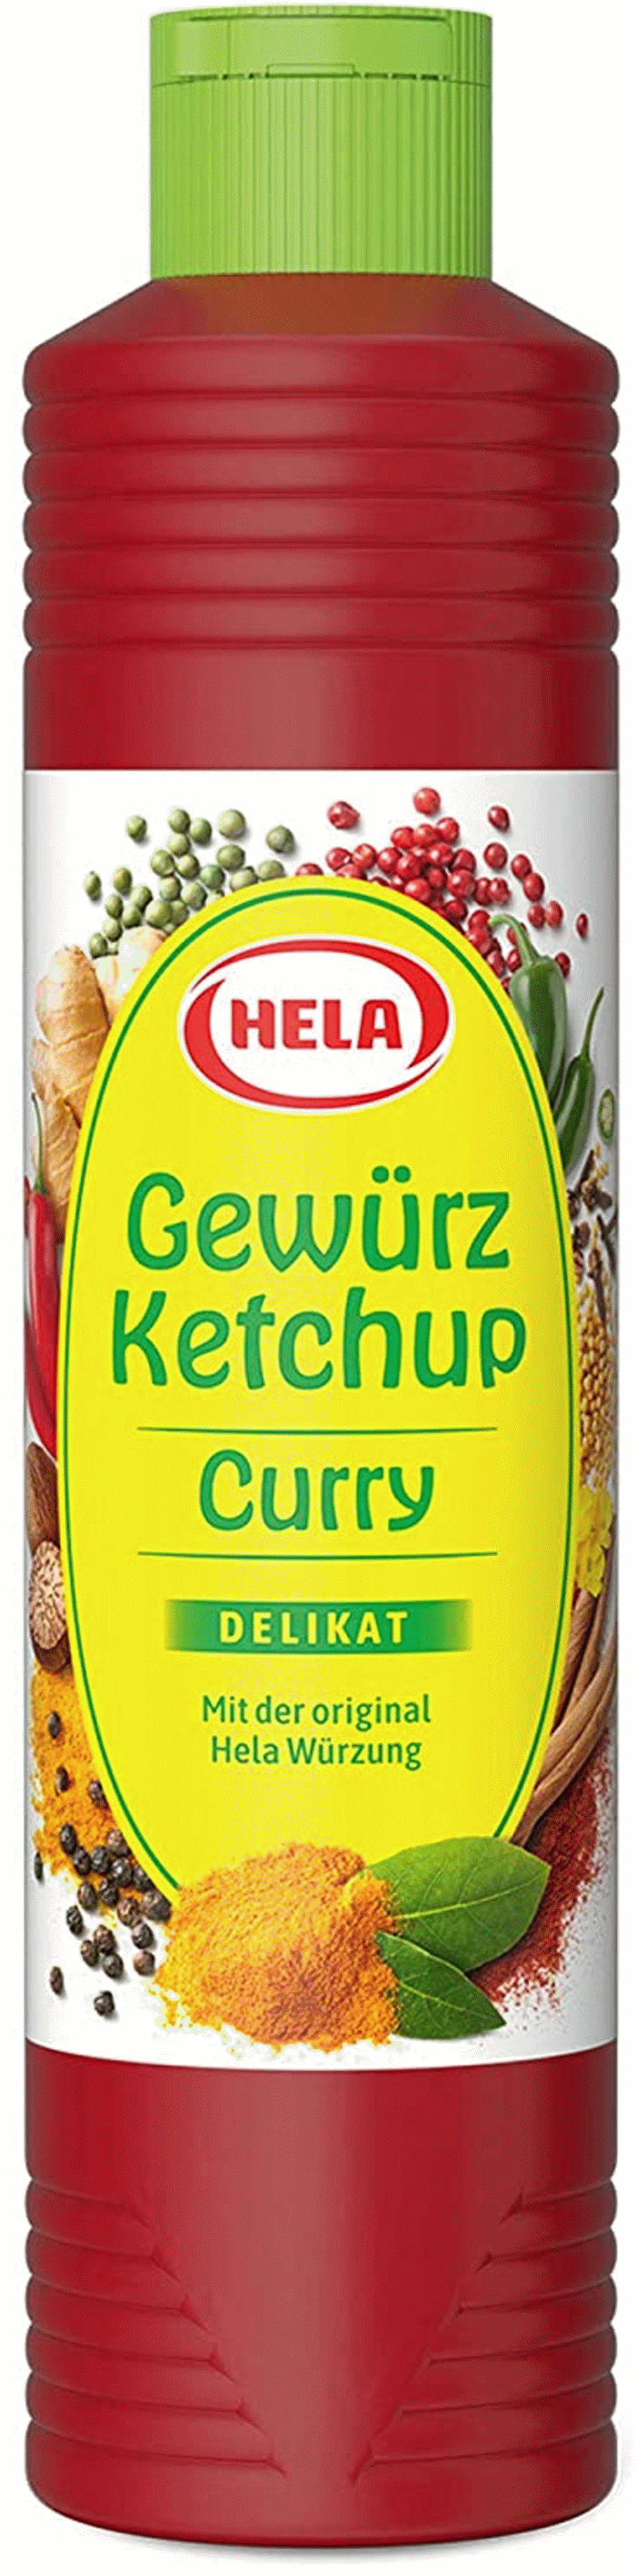 Hela Gewürz Ketchup Curry Delikat 800ml